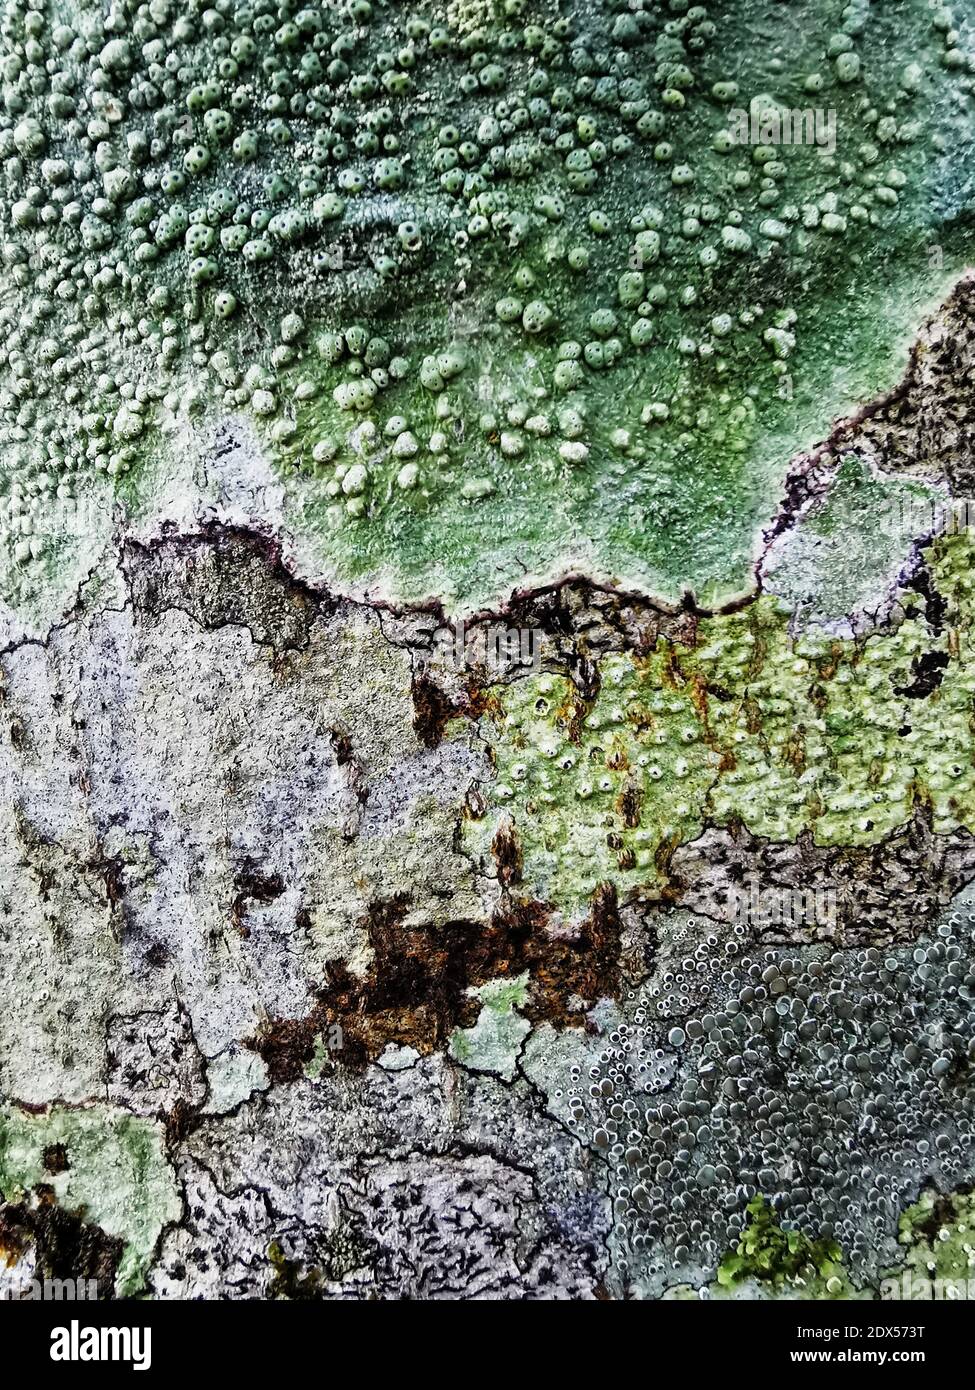 A closeup of Pertusaria - warty crustose lichens Stock Photo